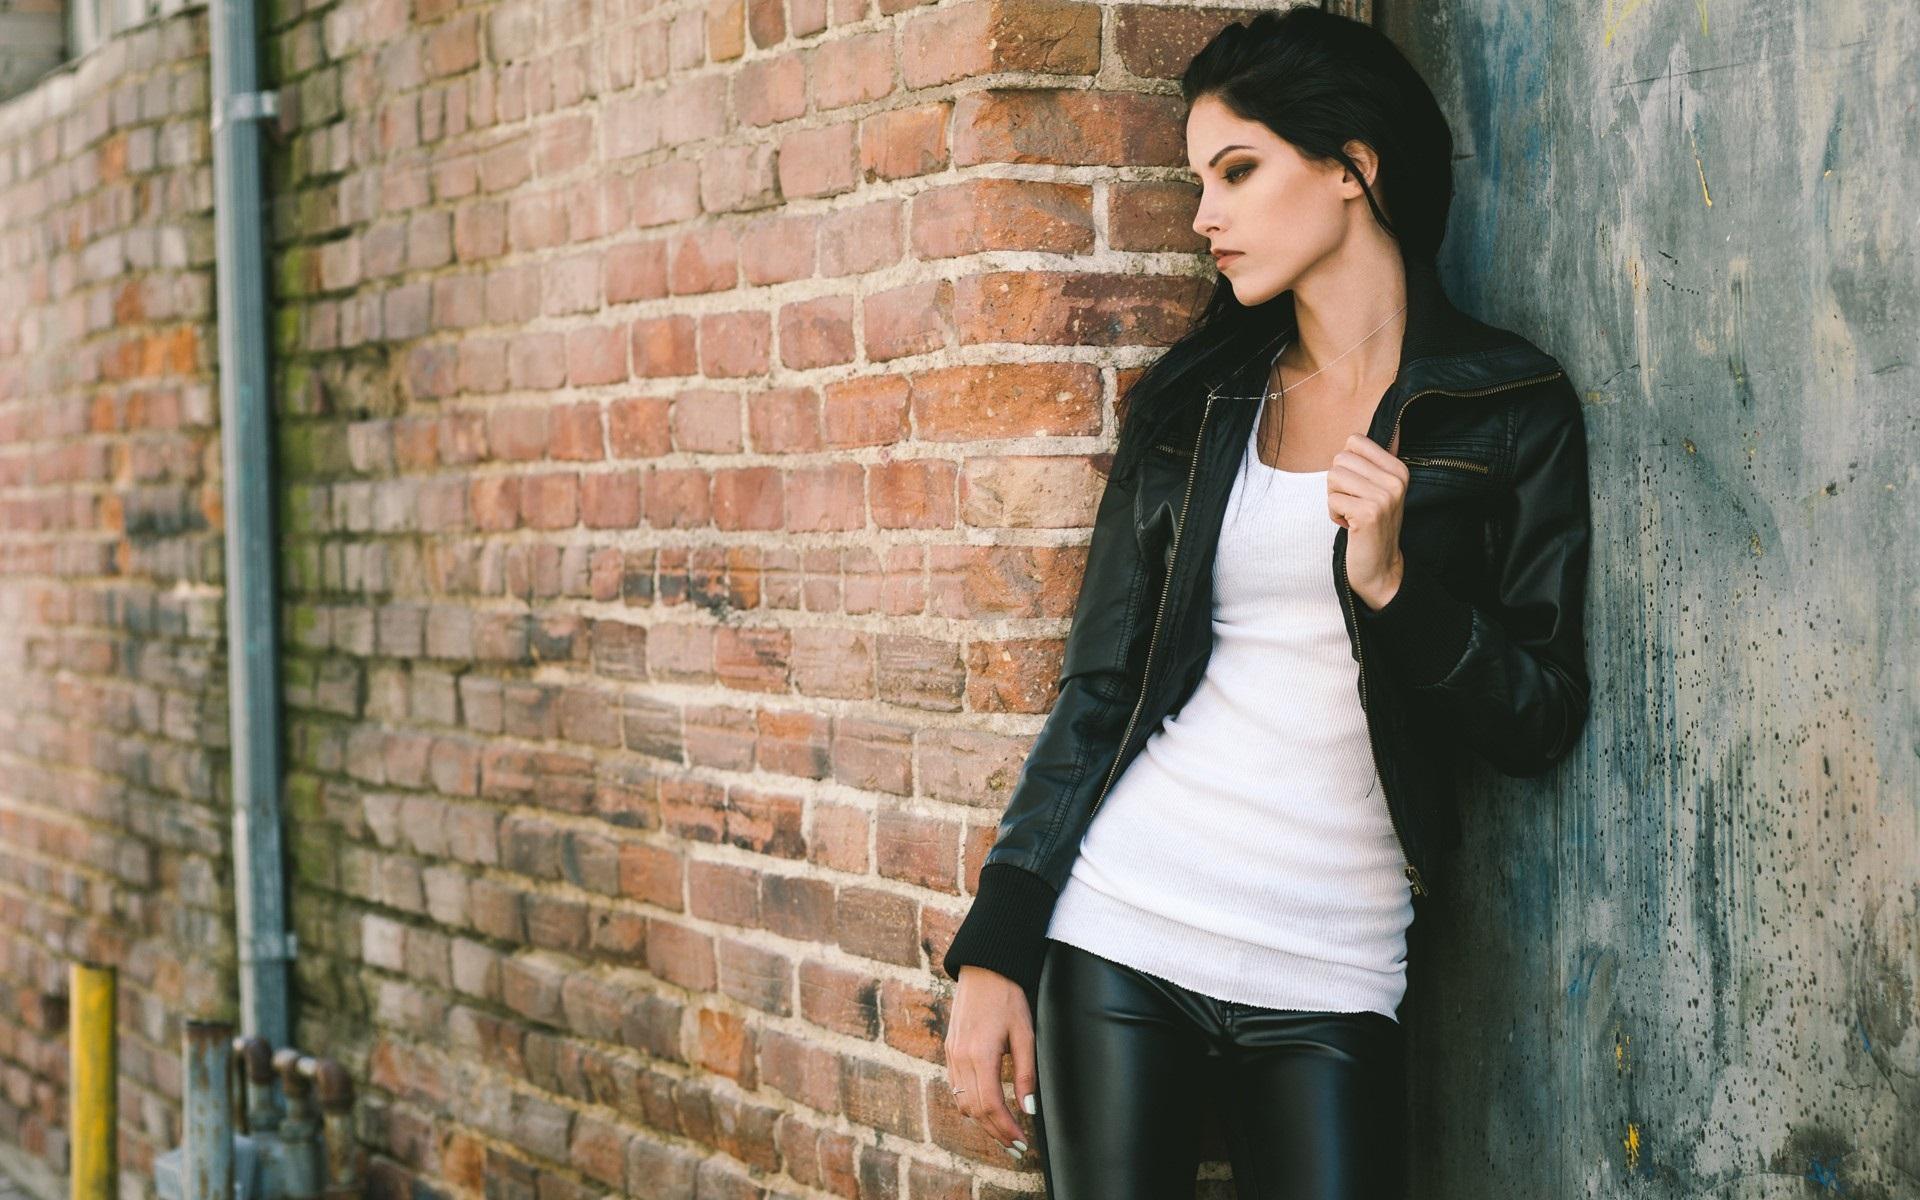 Black Leather Jacket Girl, Wall, Door 640x1136 IPhone 5 5S 5C SE